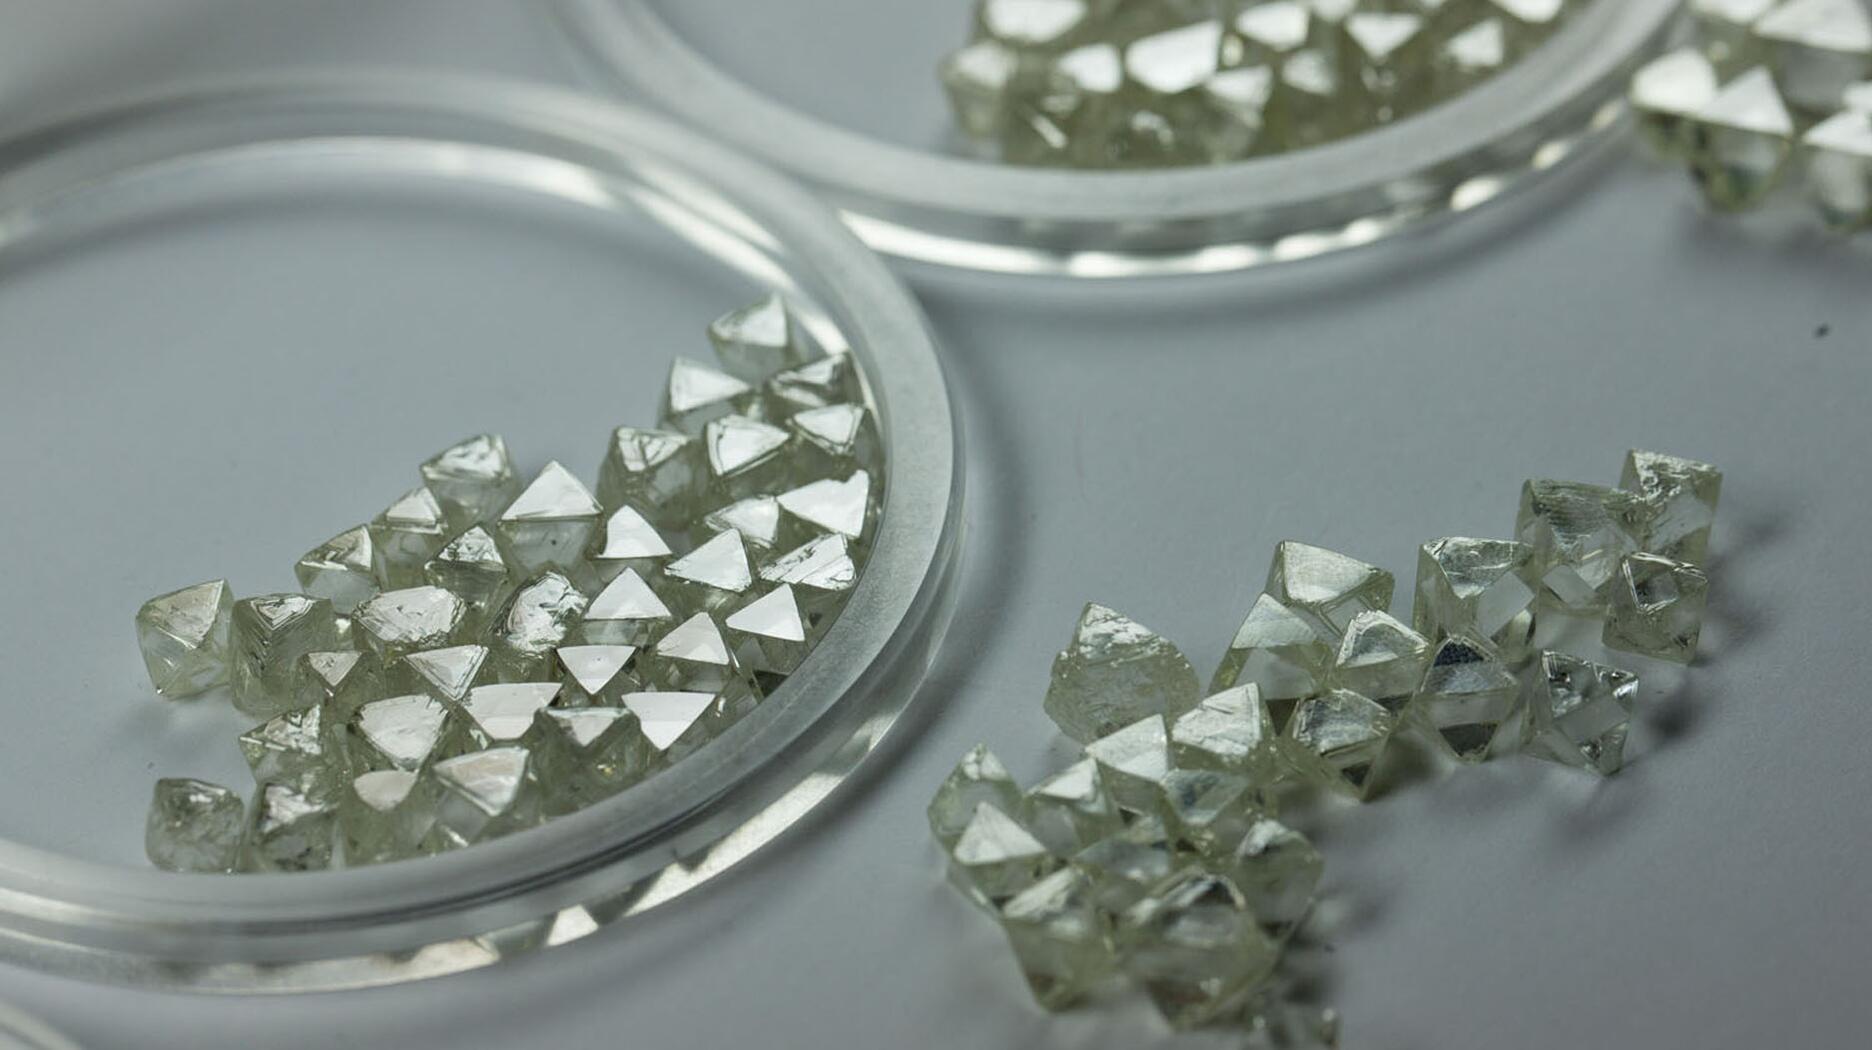 Stock photo of Russian diamonds from Alrosa